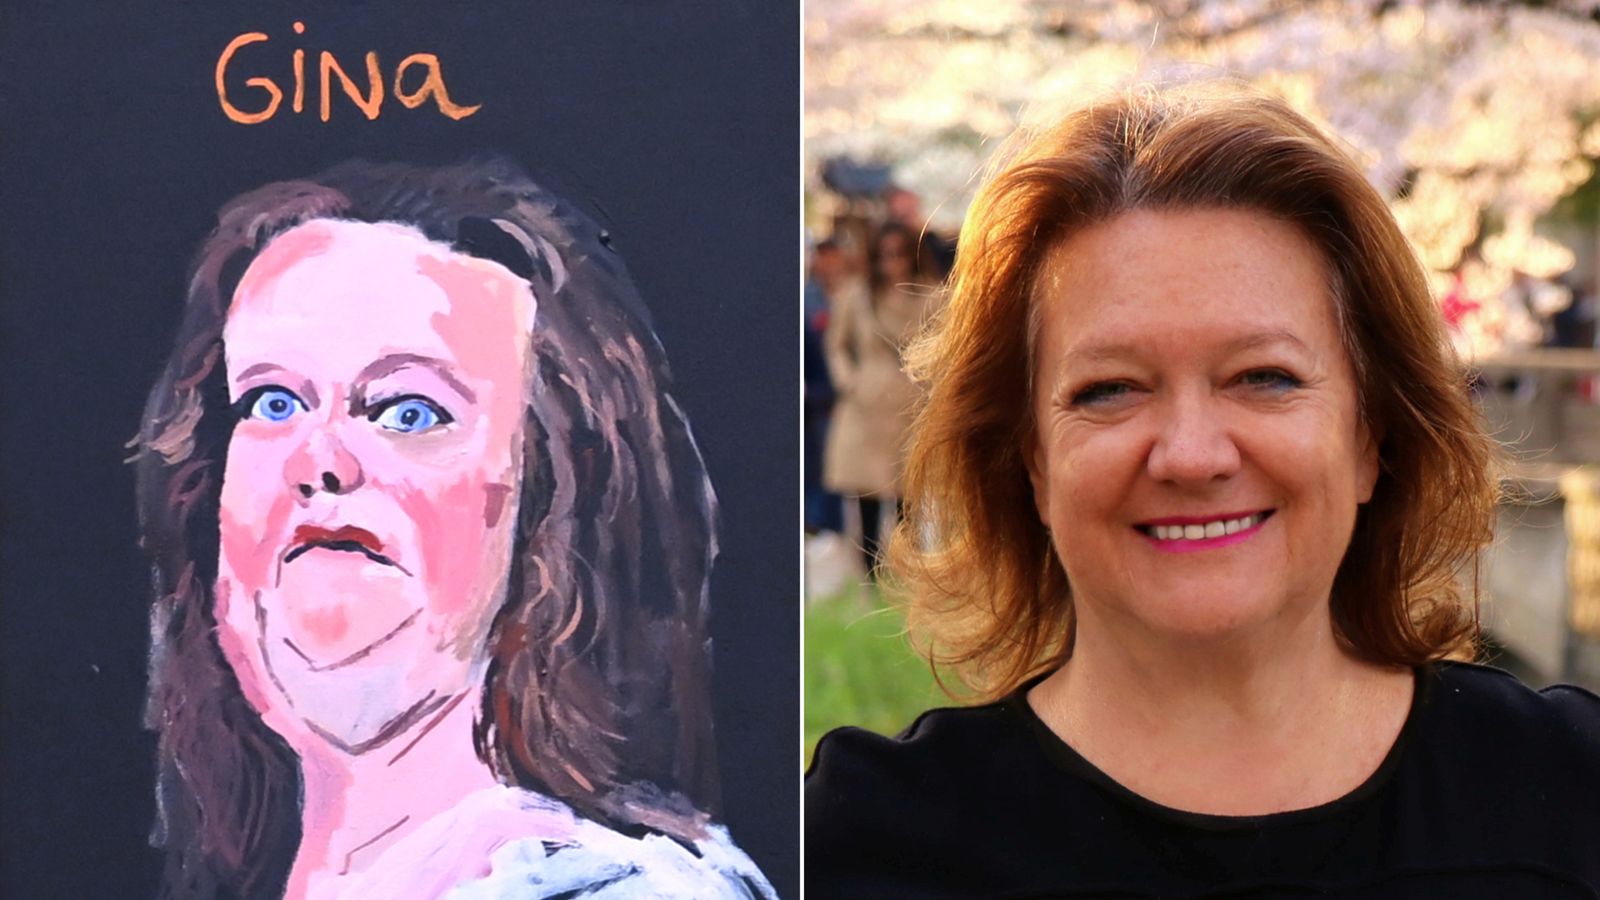 Australia’s richest woman Gina Rinehart ‘demands’ gallery removes her portrait